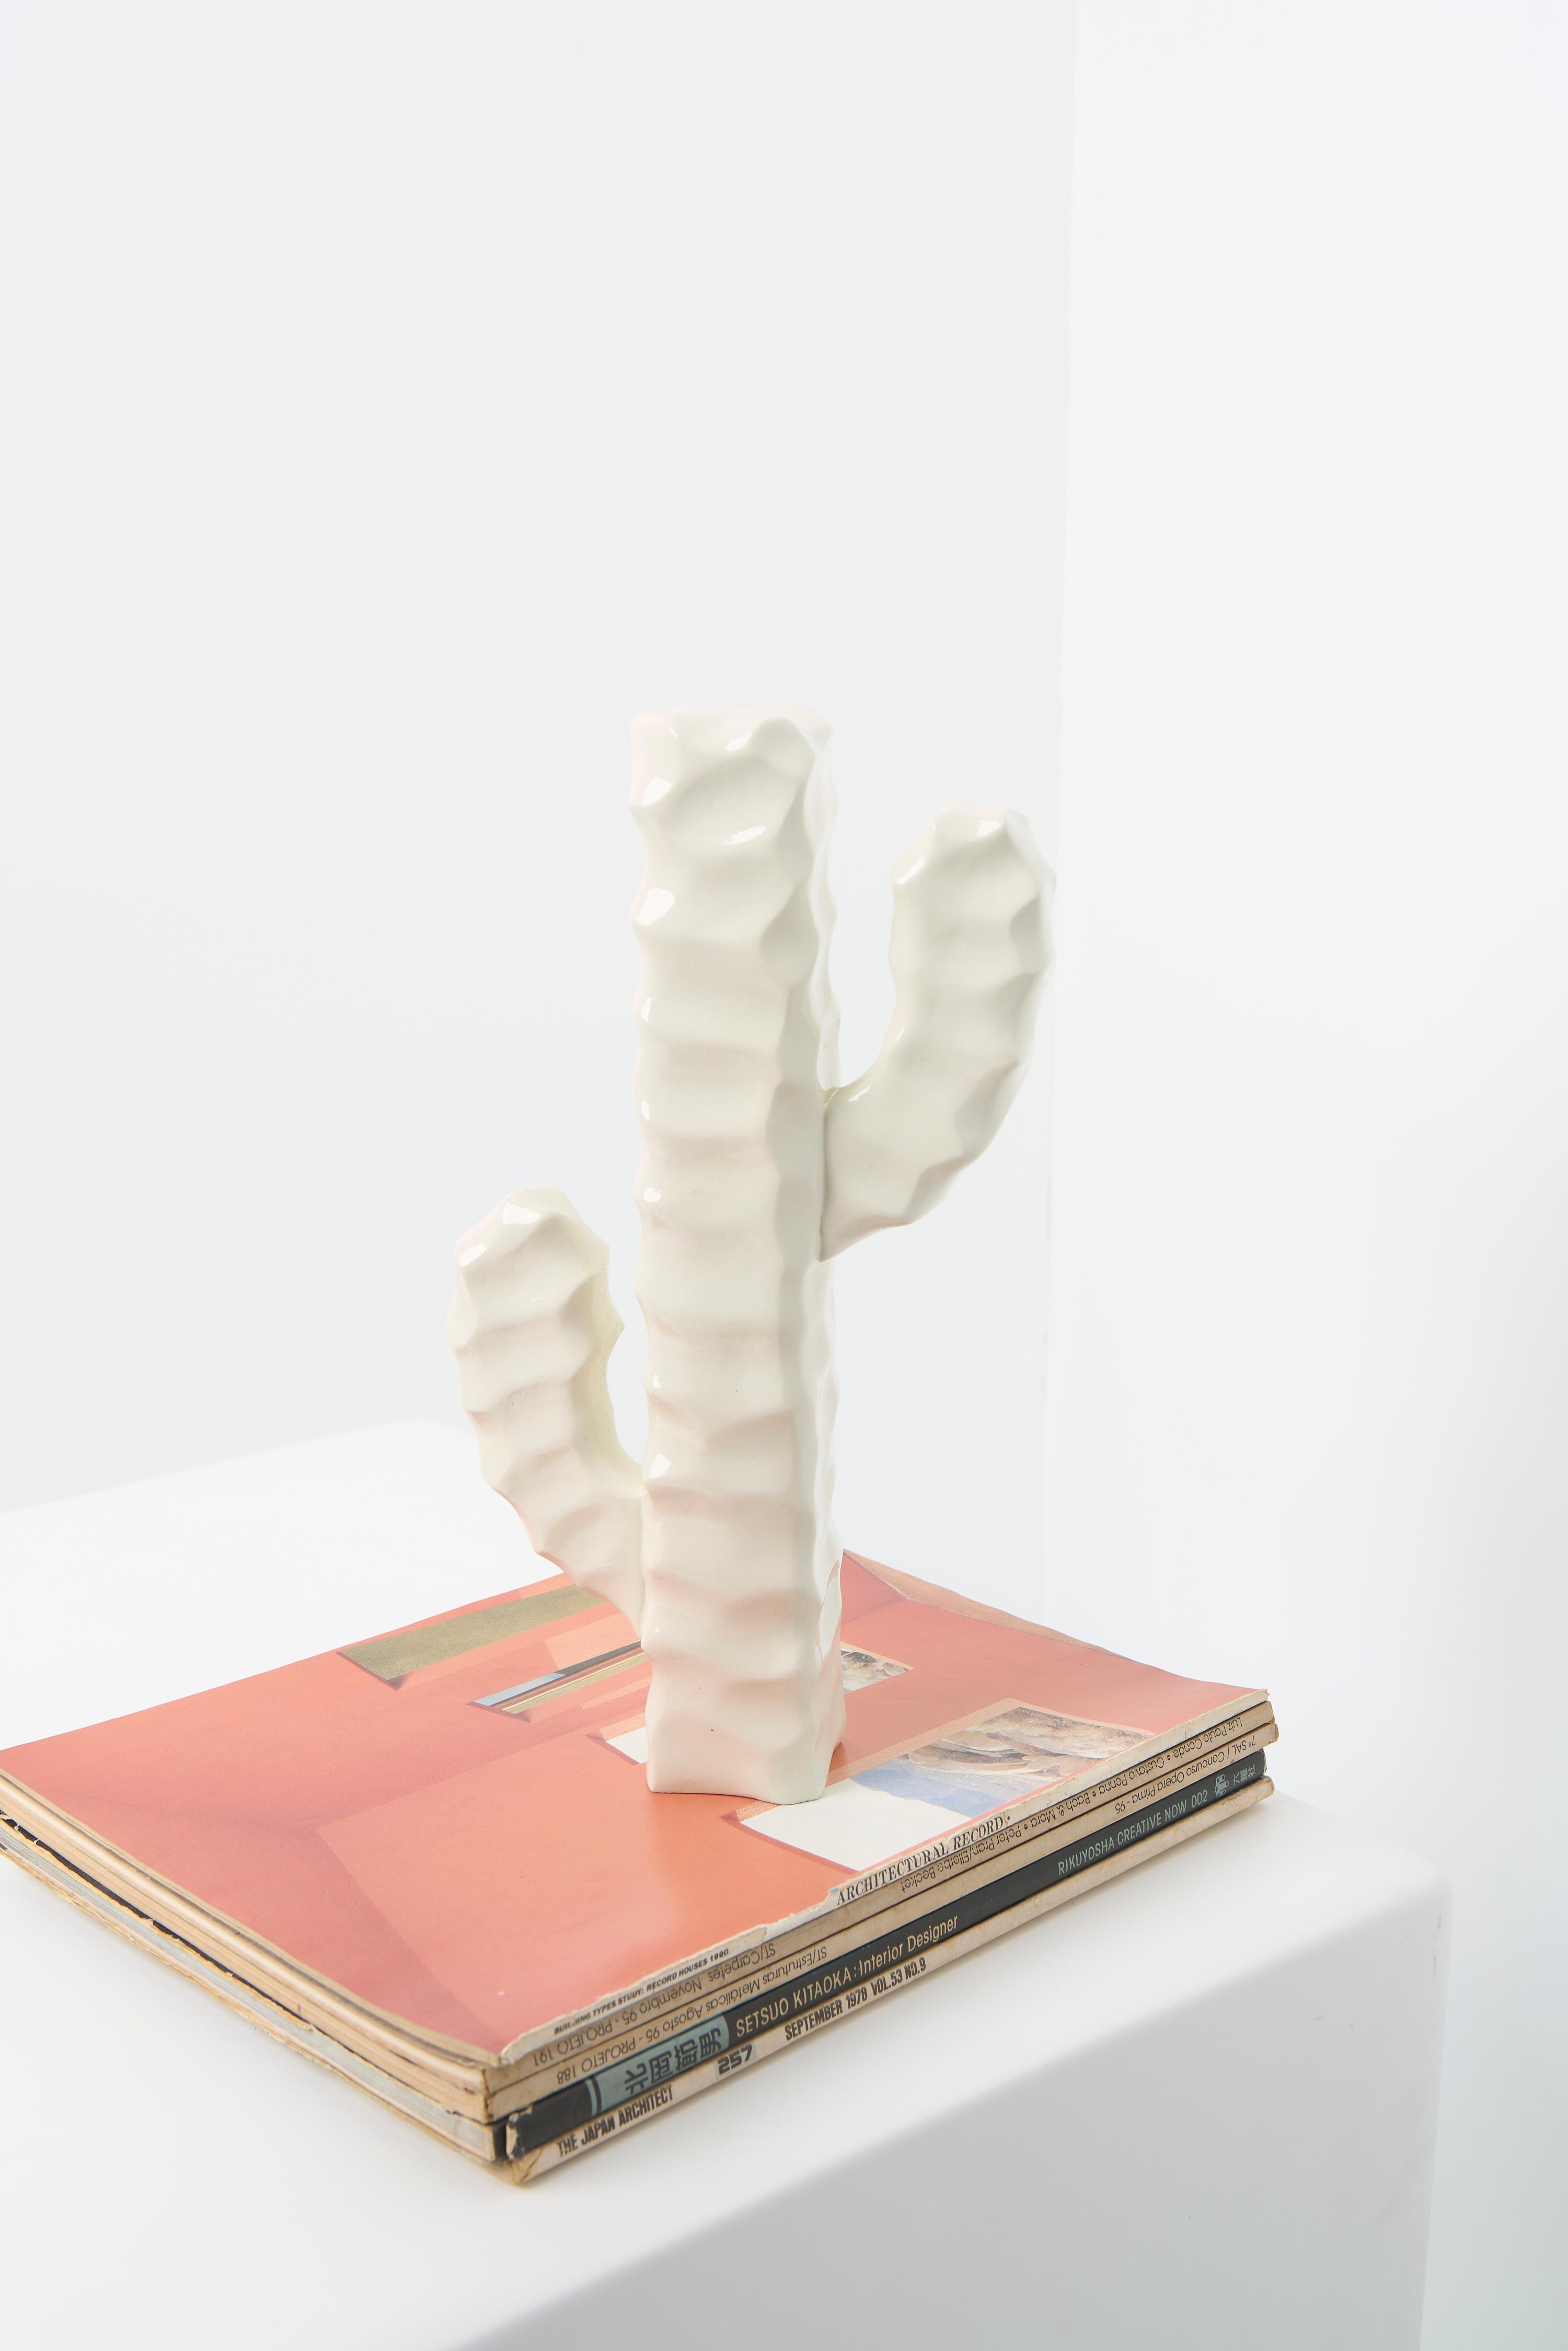 Mandacaru Series, Wooden Cactus Table Sculpture For Sale 2